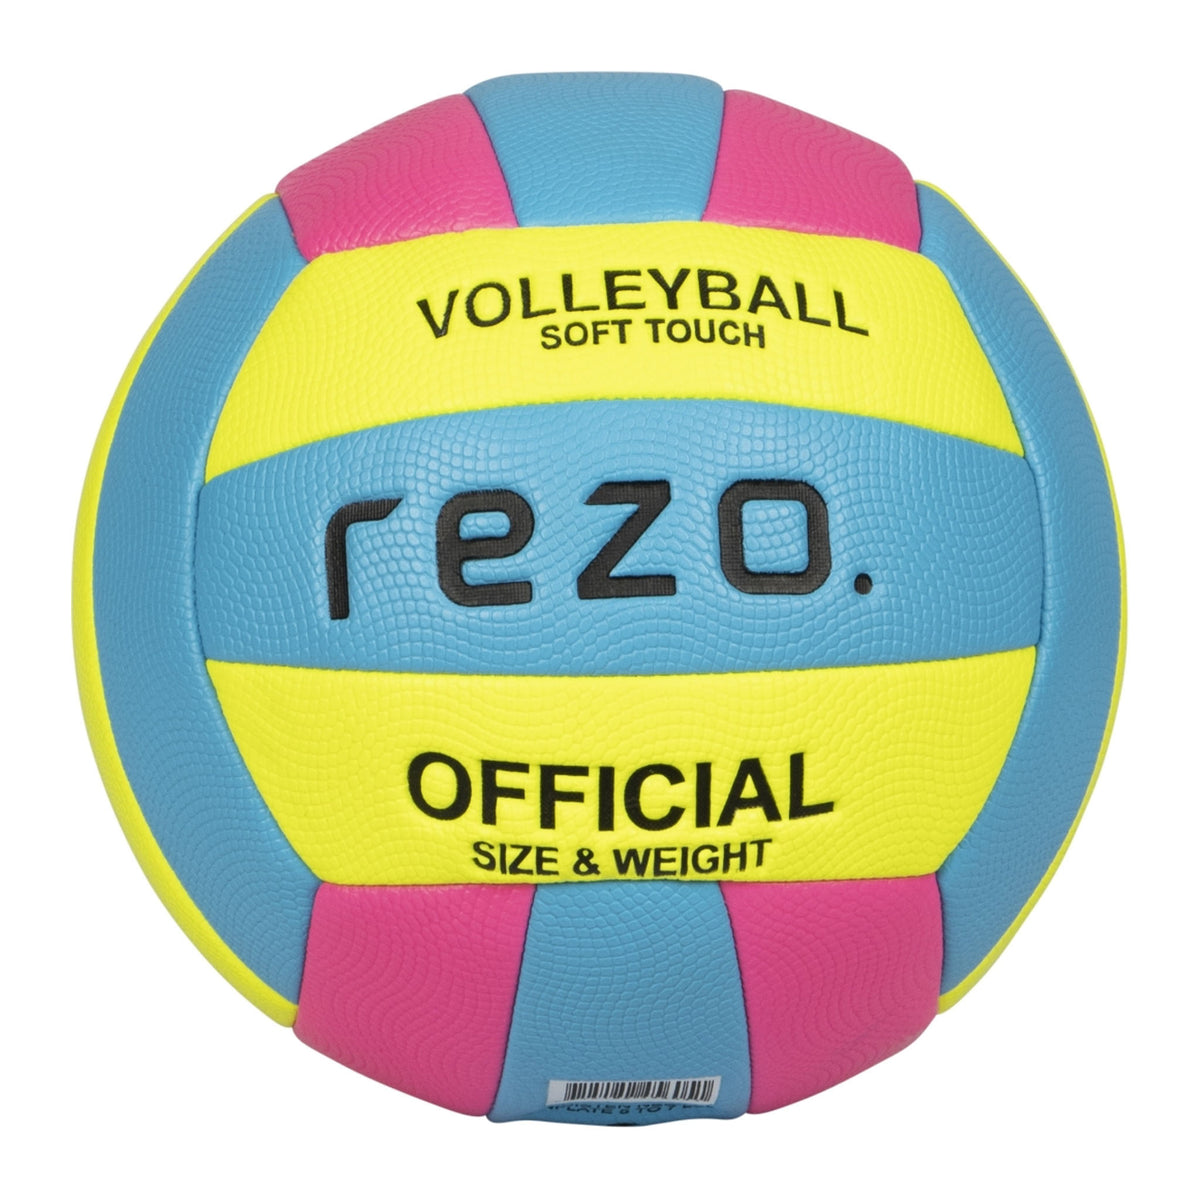 Rezo Volleyball